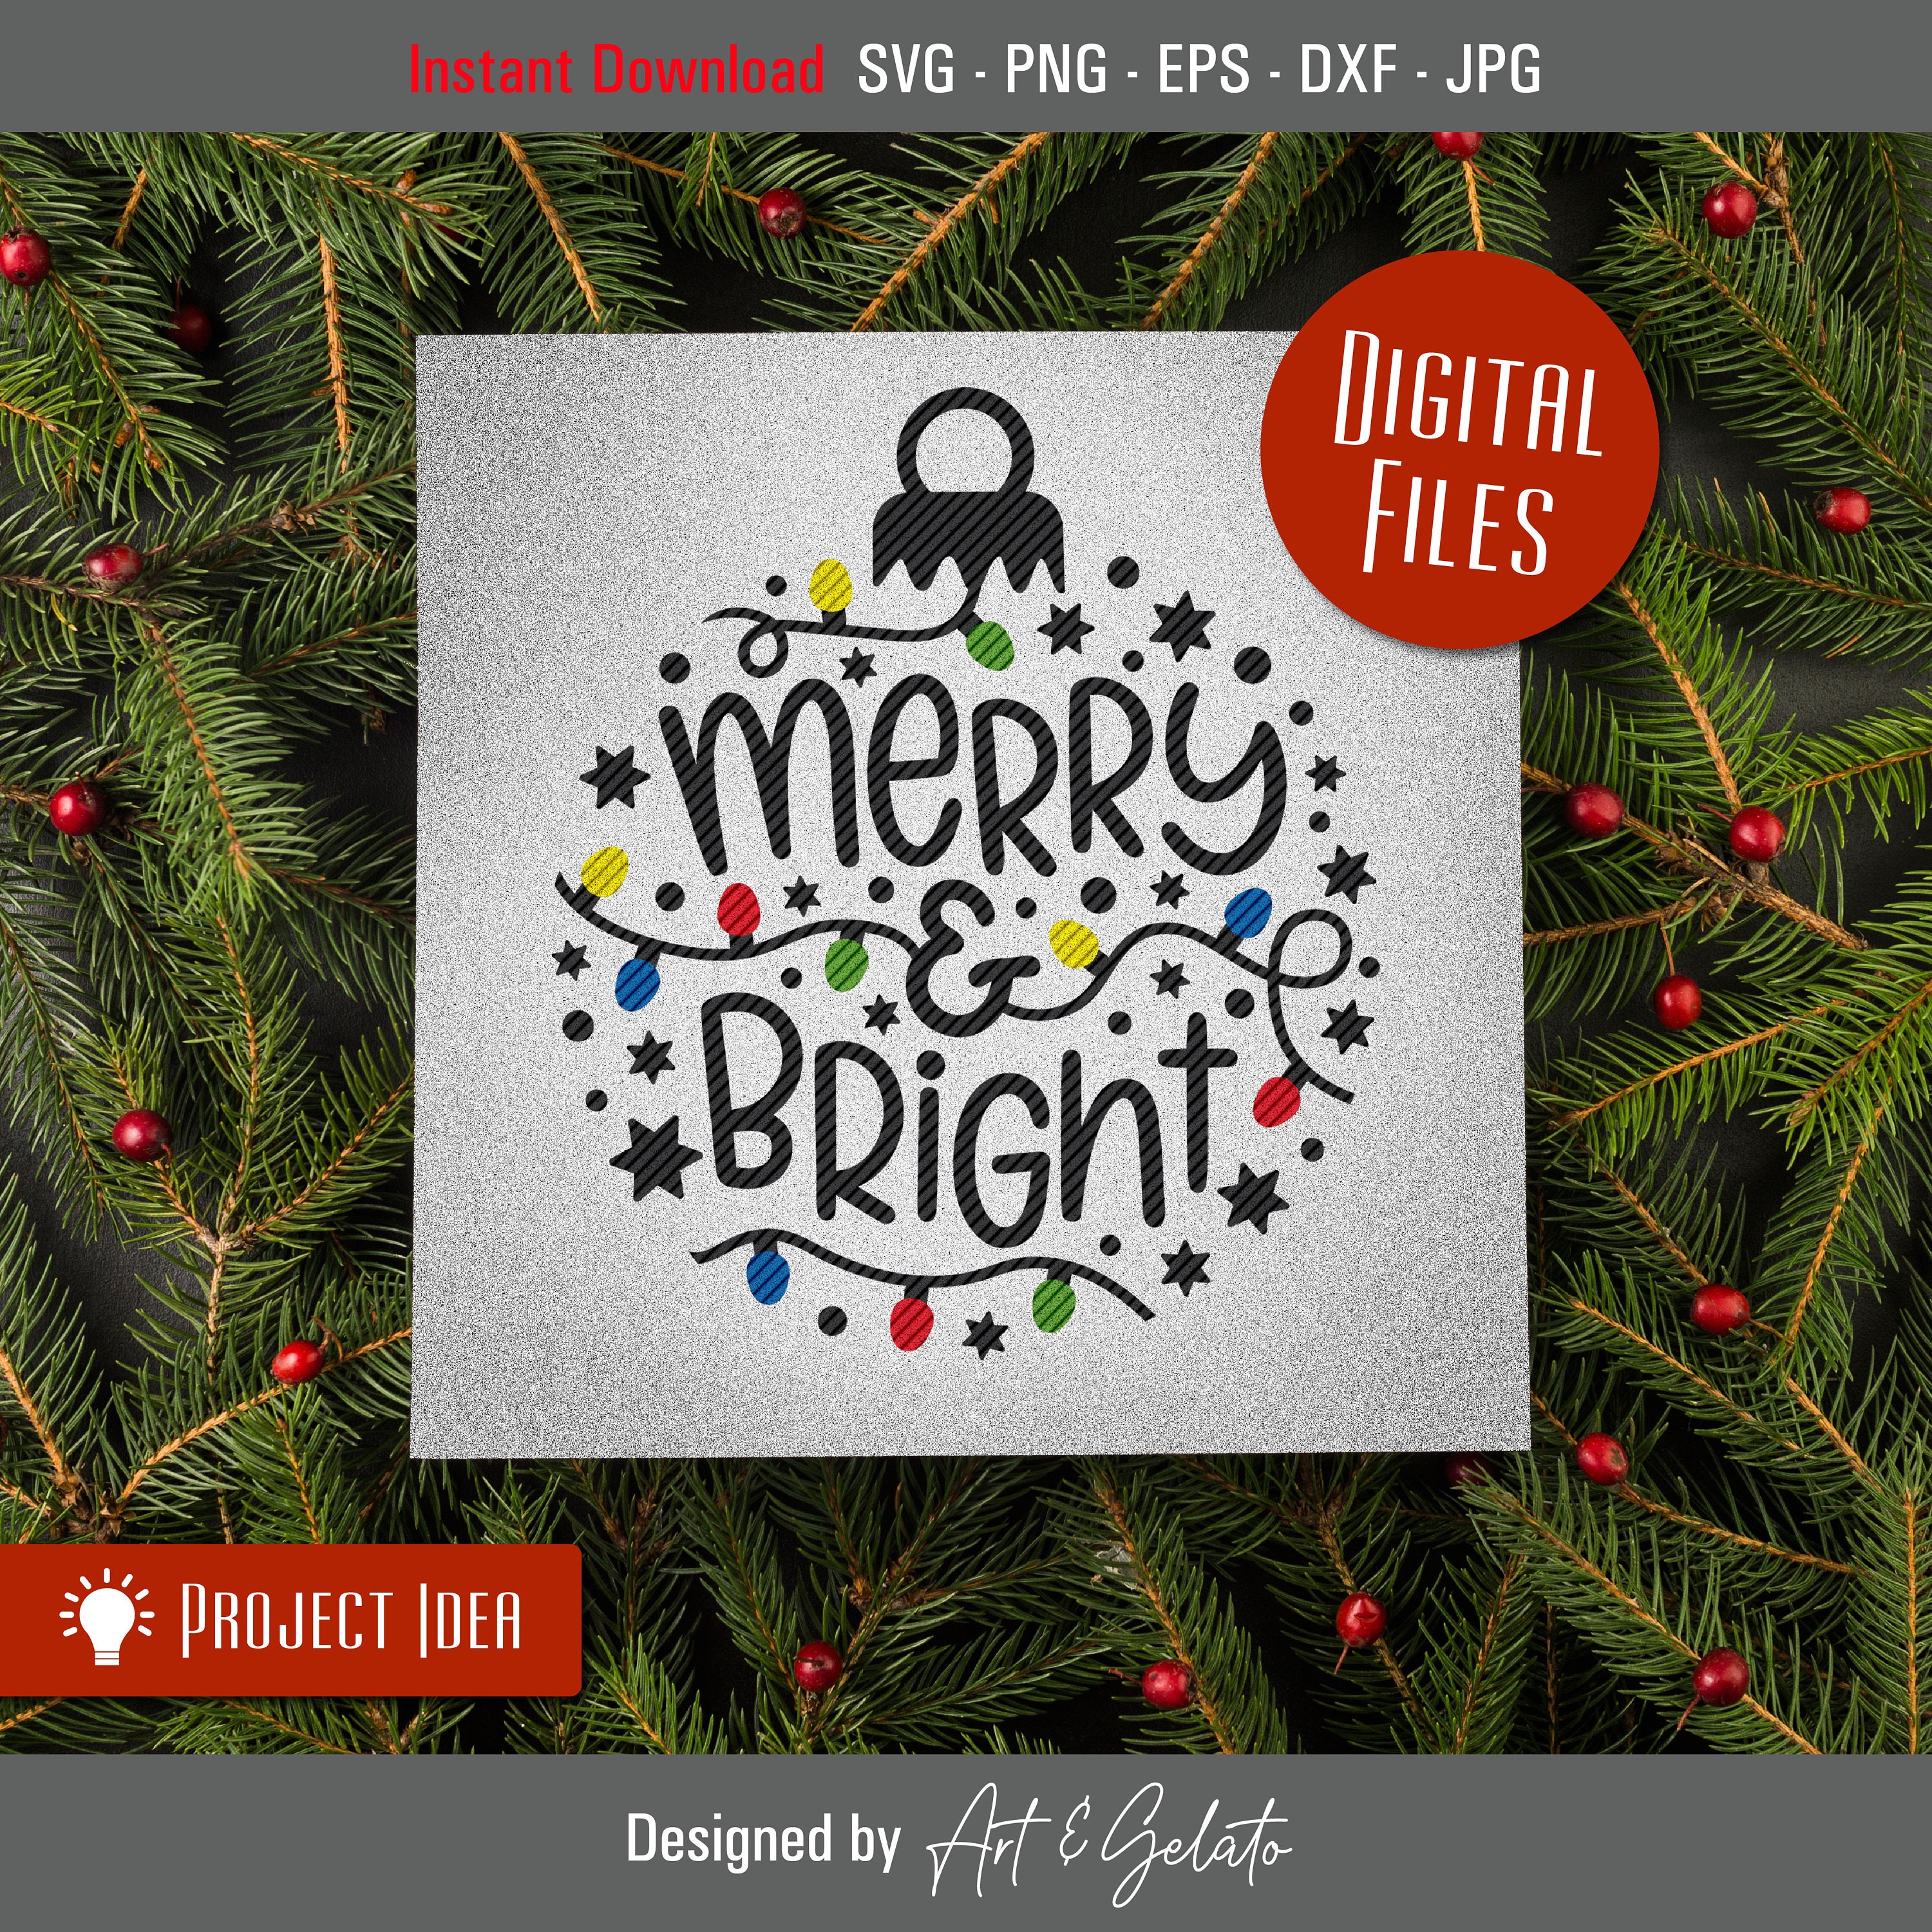 Neighbor Christmas Ornament SVG, Friends Graphic by Premium Digital Files ·  Creative Fabrica